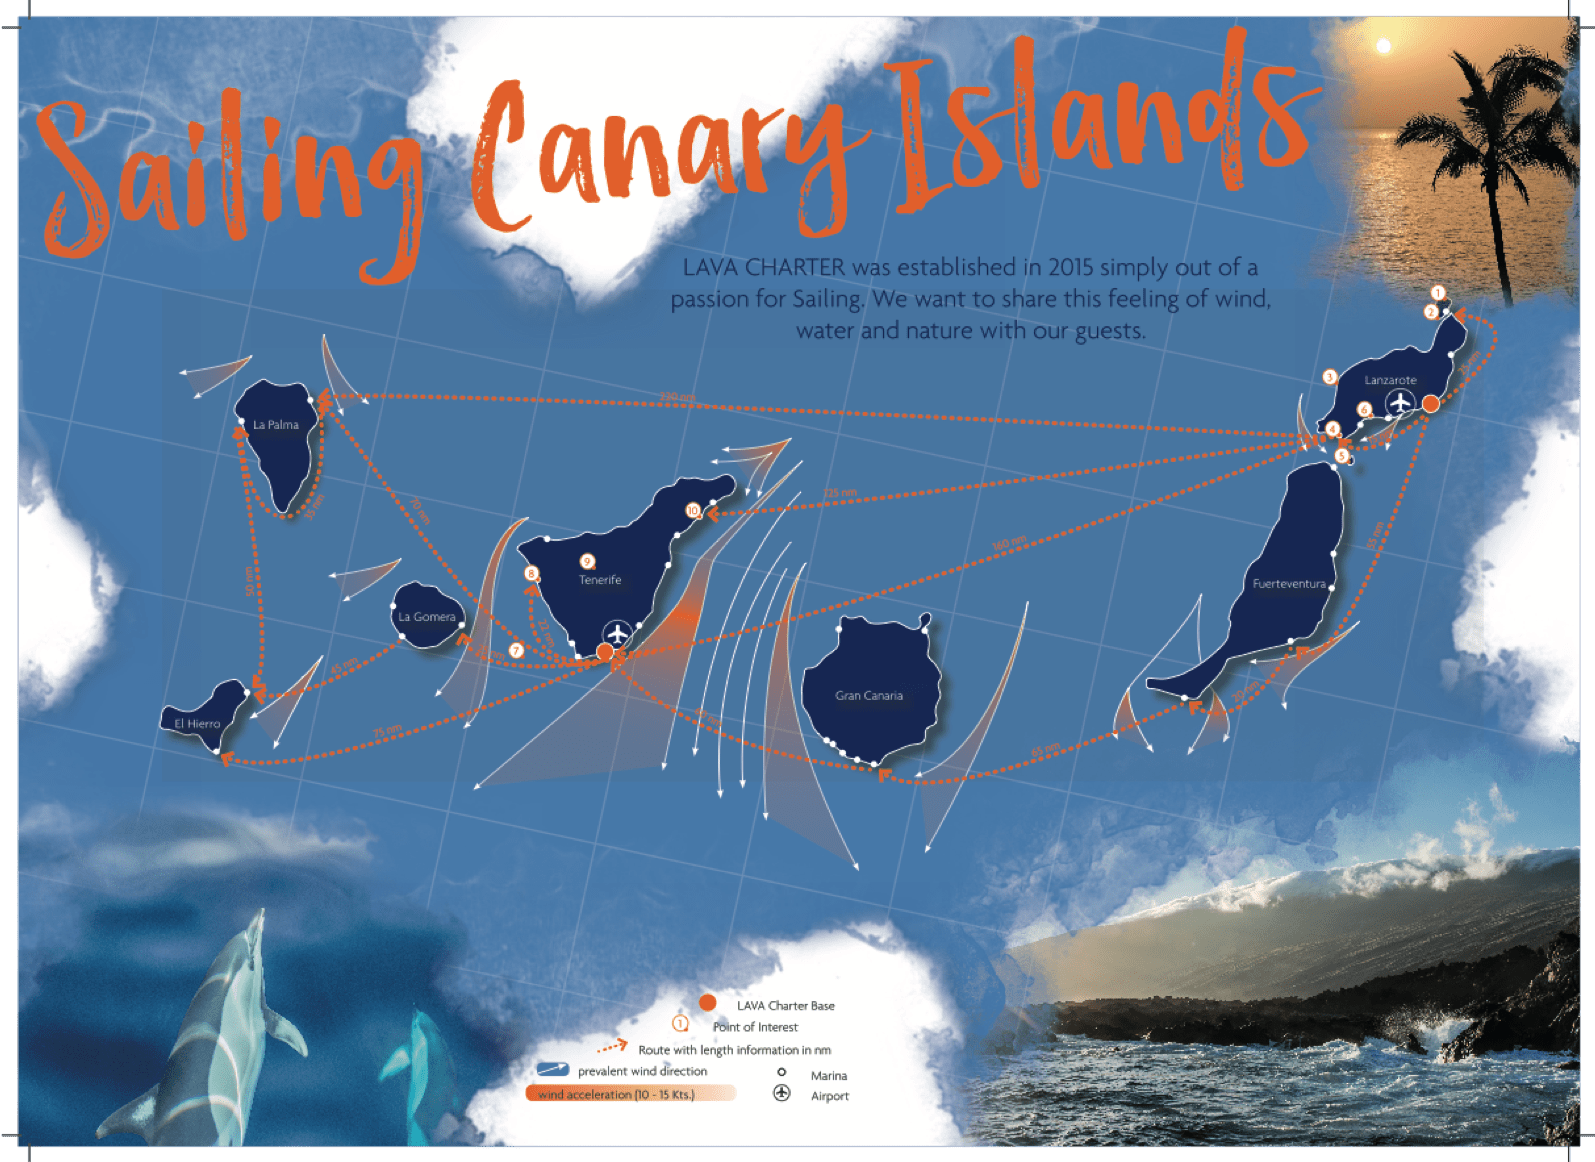 Sailing Canary Islands